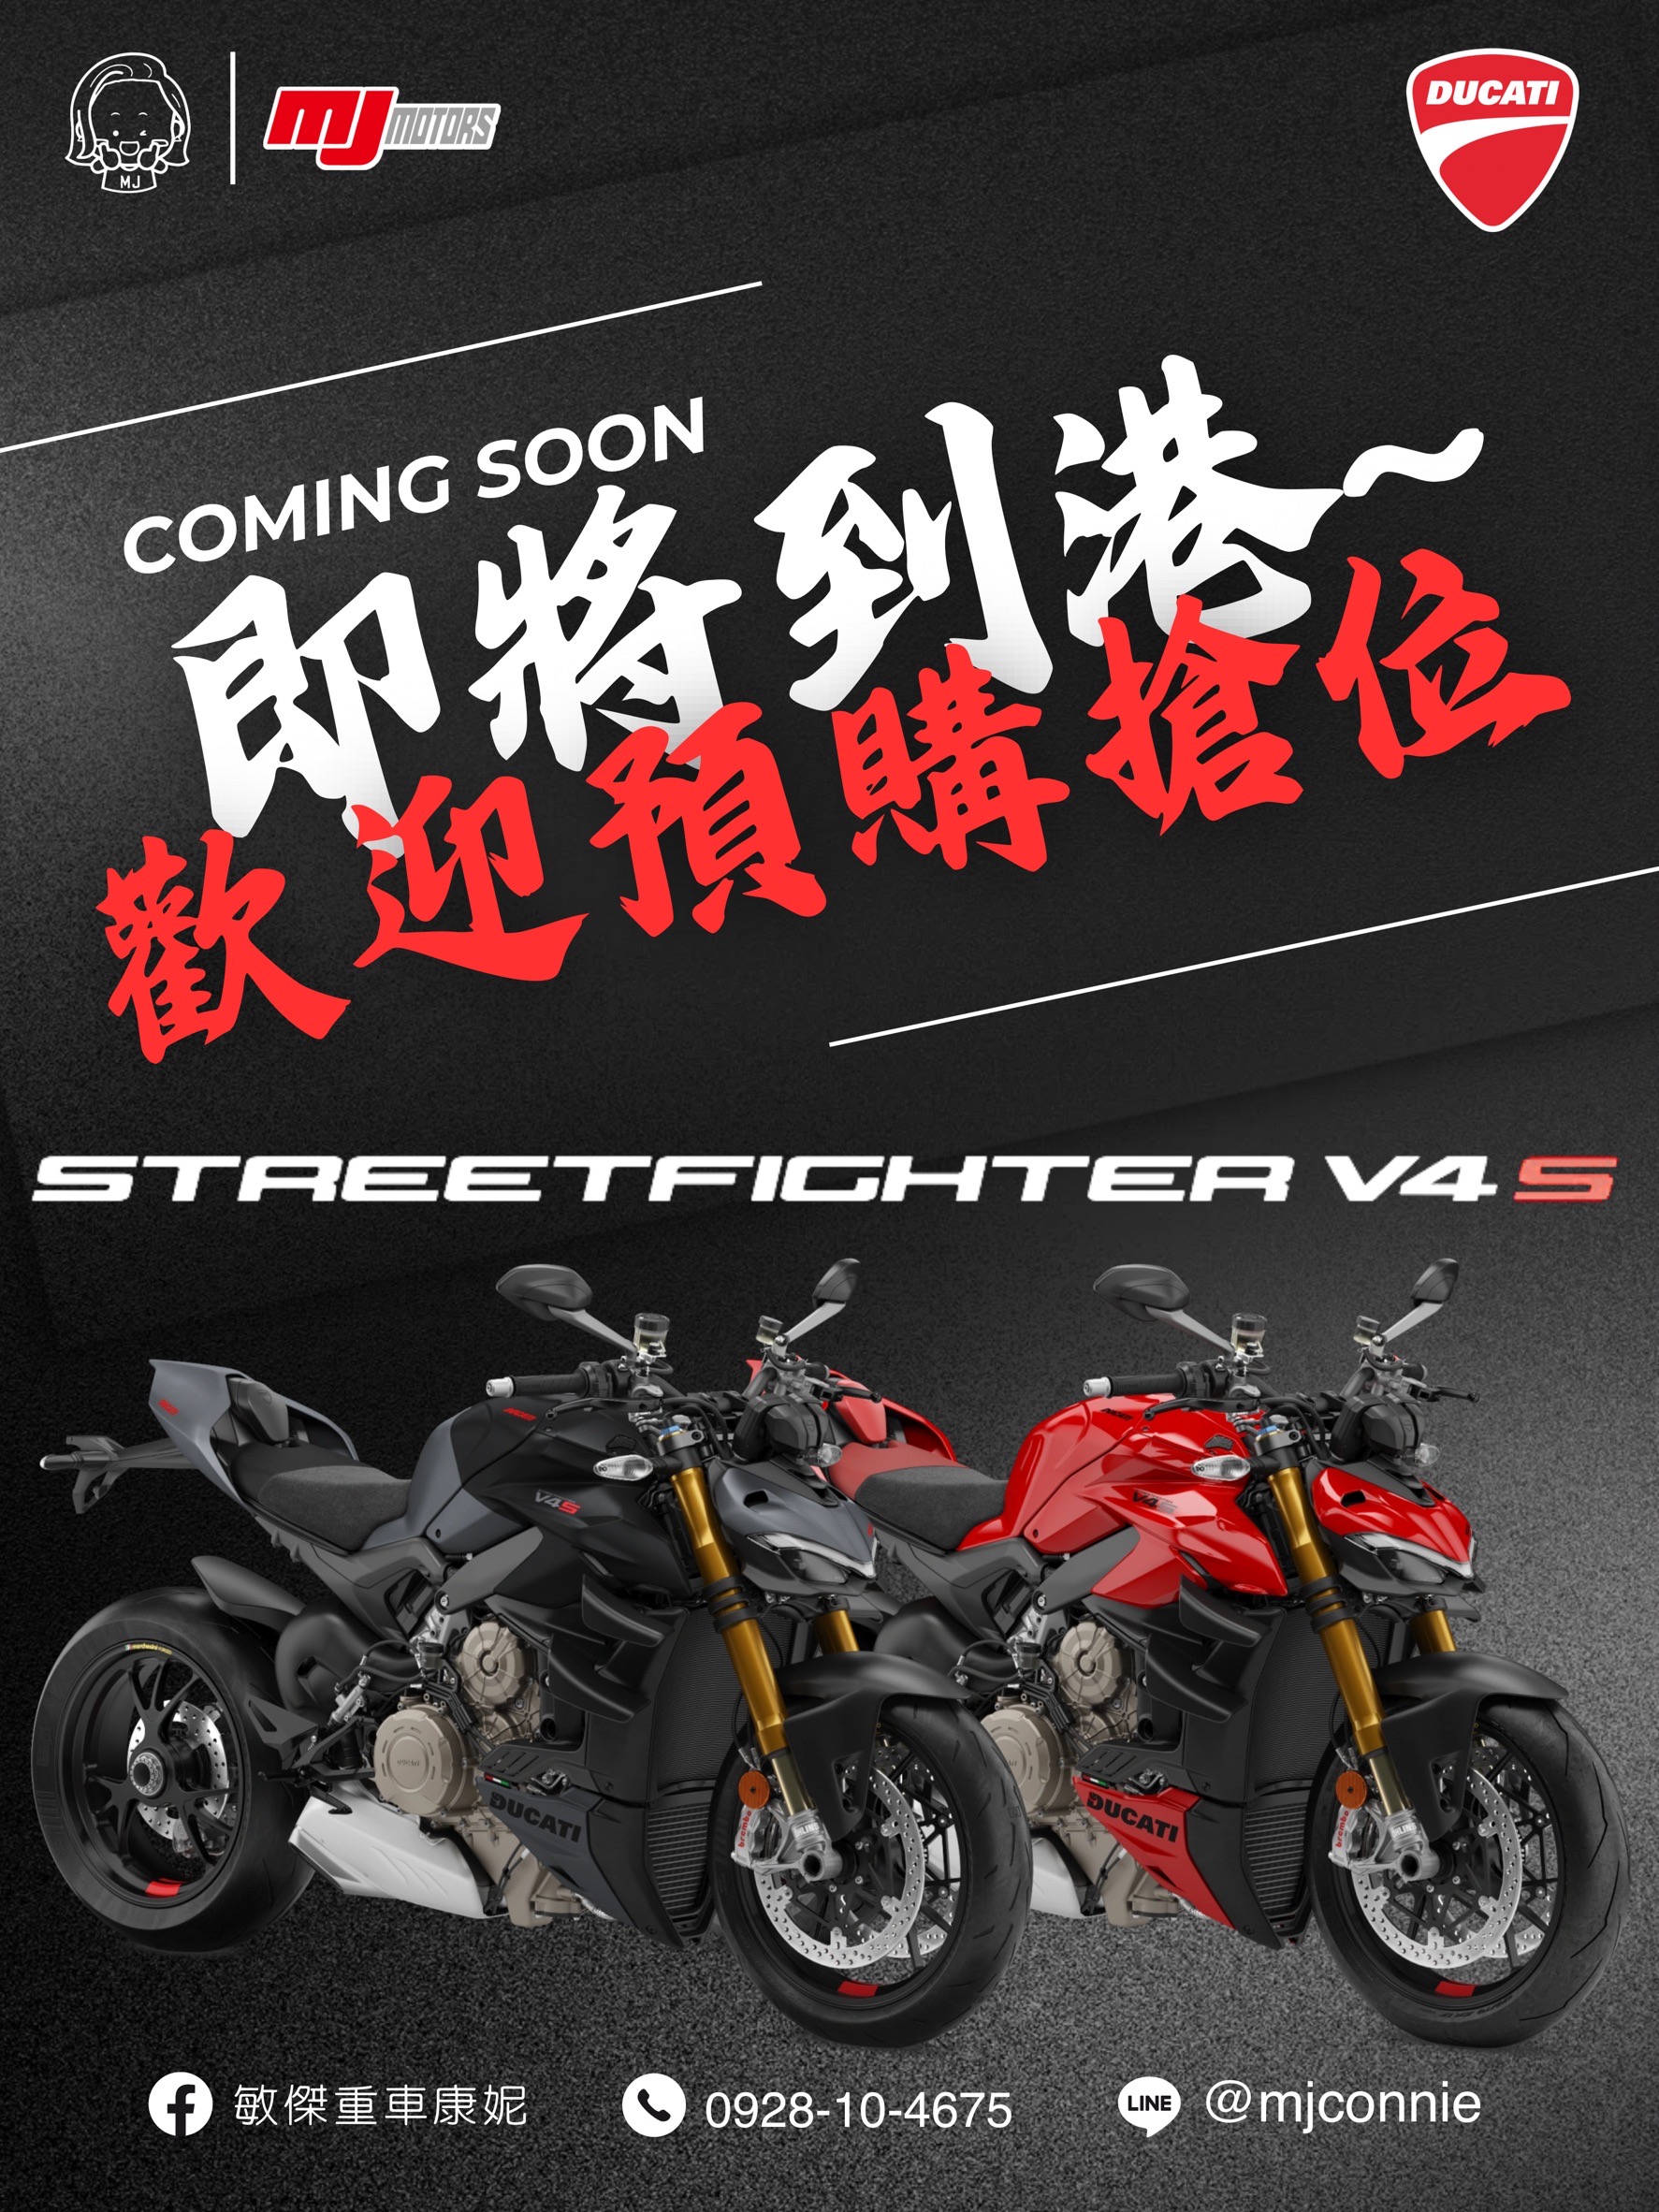 DUCATI STREETFIGHTER V4 S新車出售中 『敏傑康妮』Ducati StreetFighter V2 StreetFighter V4s 現車現領 不用等!!! | 敏傑車業資深銷售專員 康妮 Connie